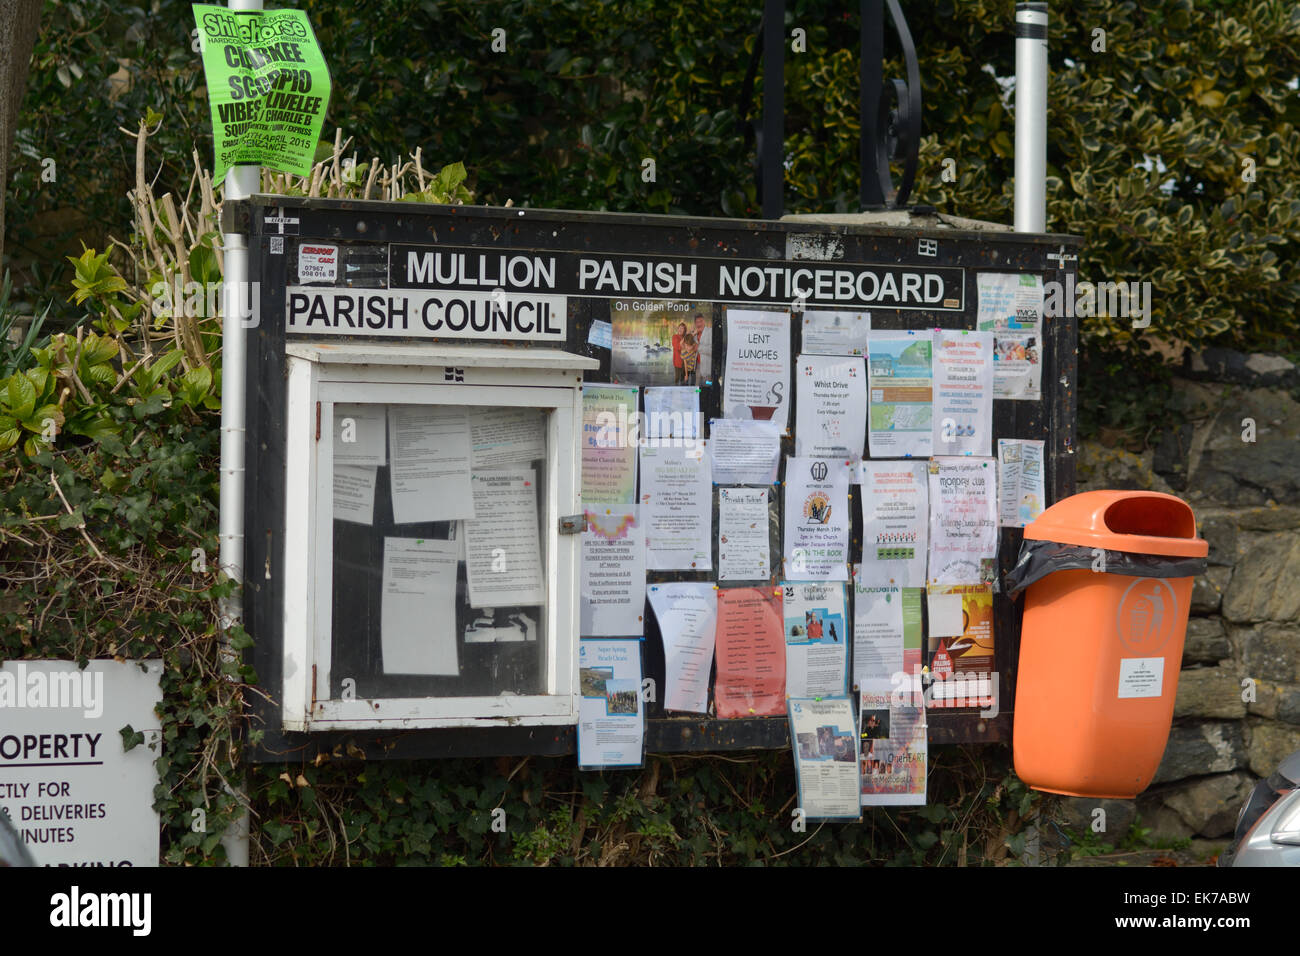 Mullion Parish Council Noticeboard covered in leaflets, Mullion, Cornwall, England Stock Photo